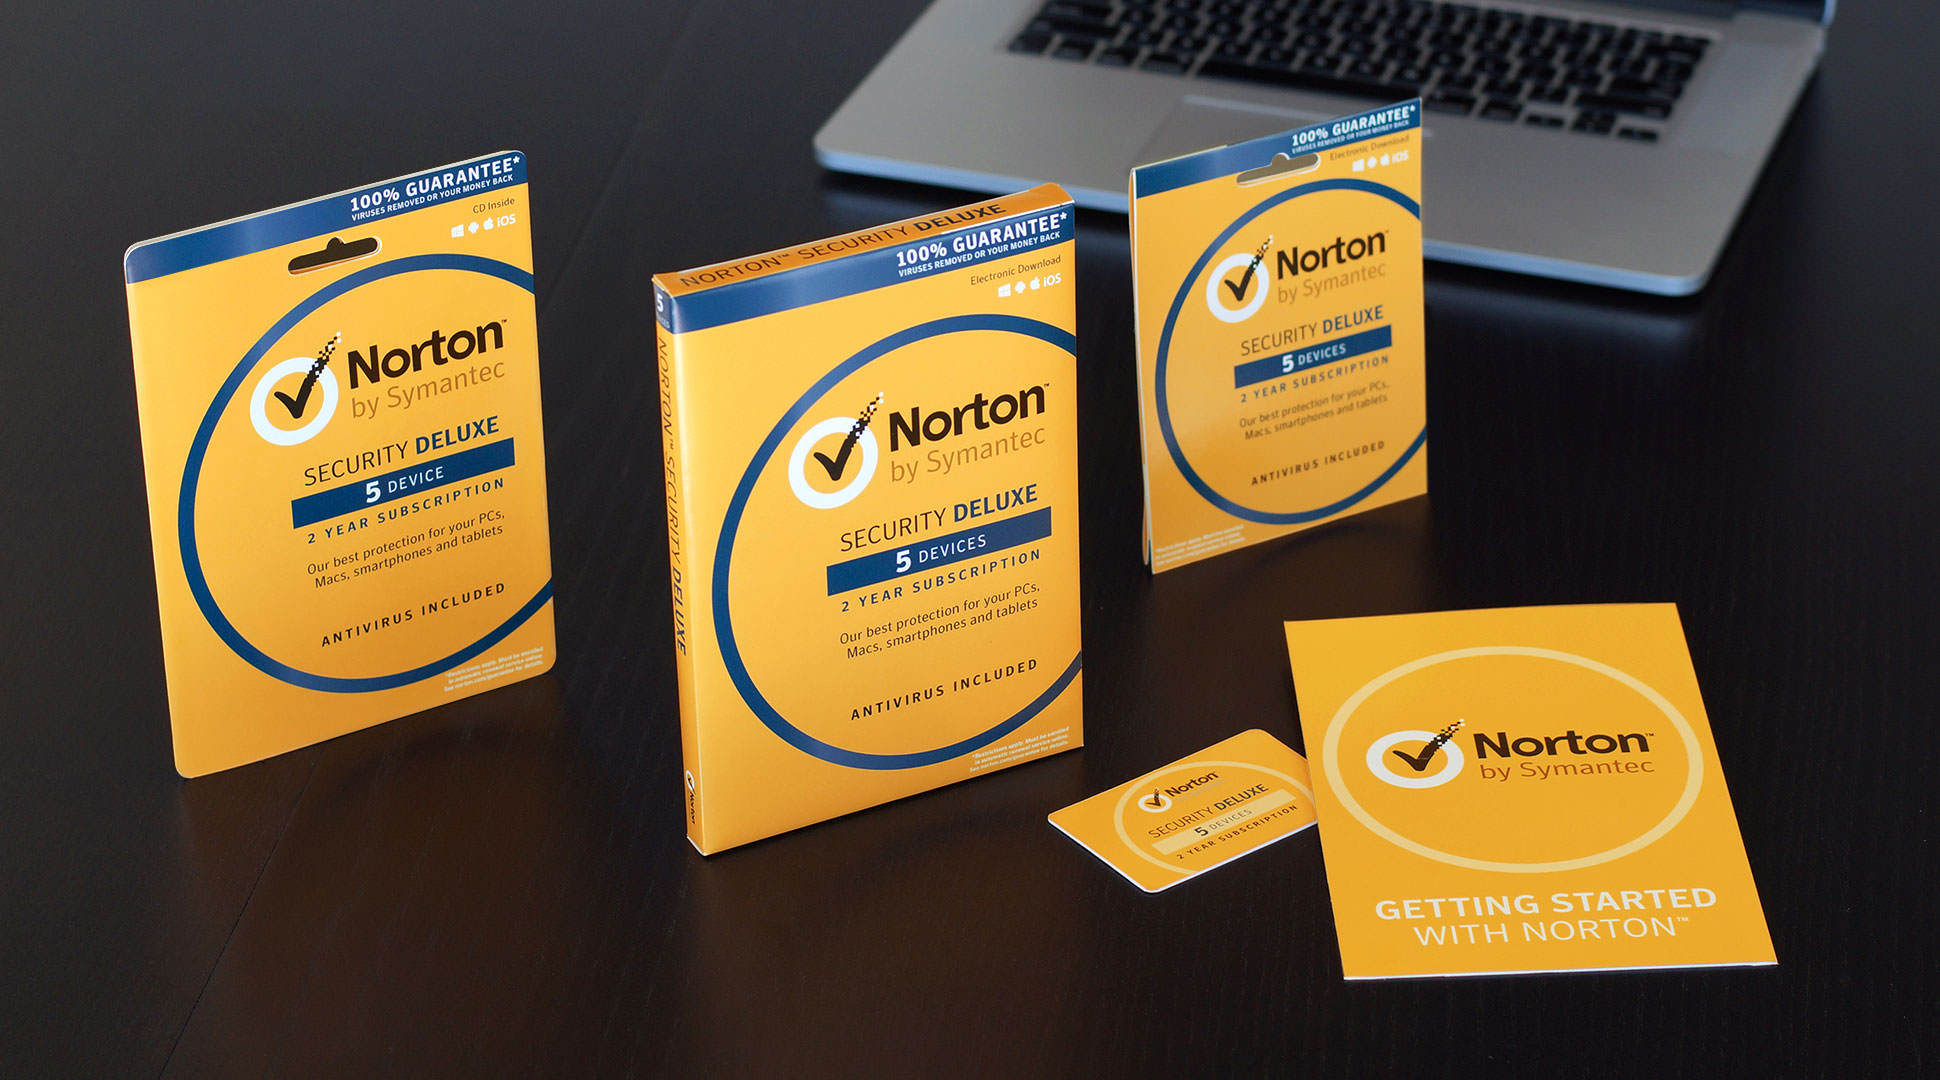 Buy Software: Norton Security Deluxe 2020